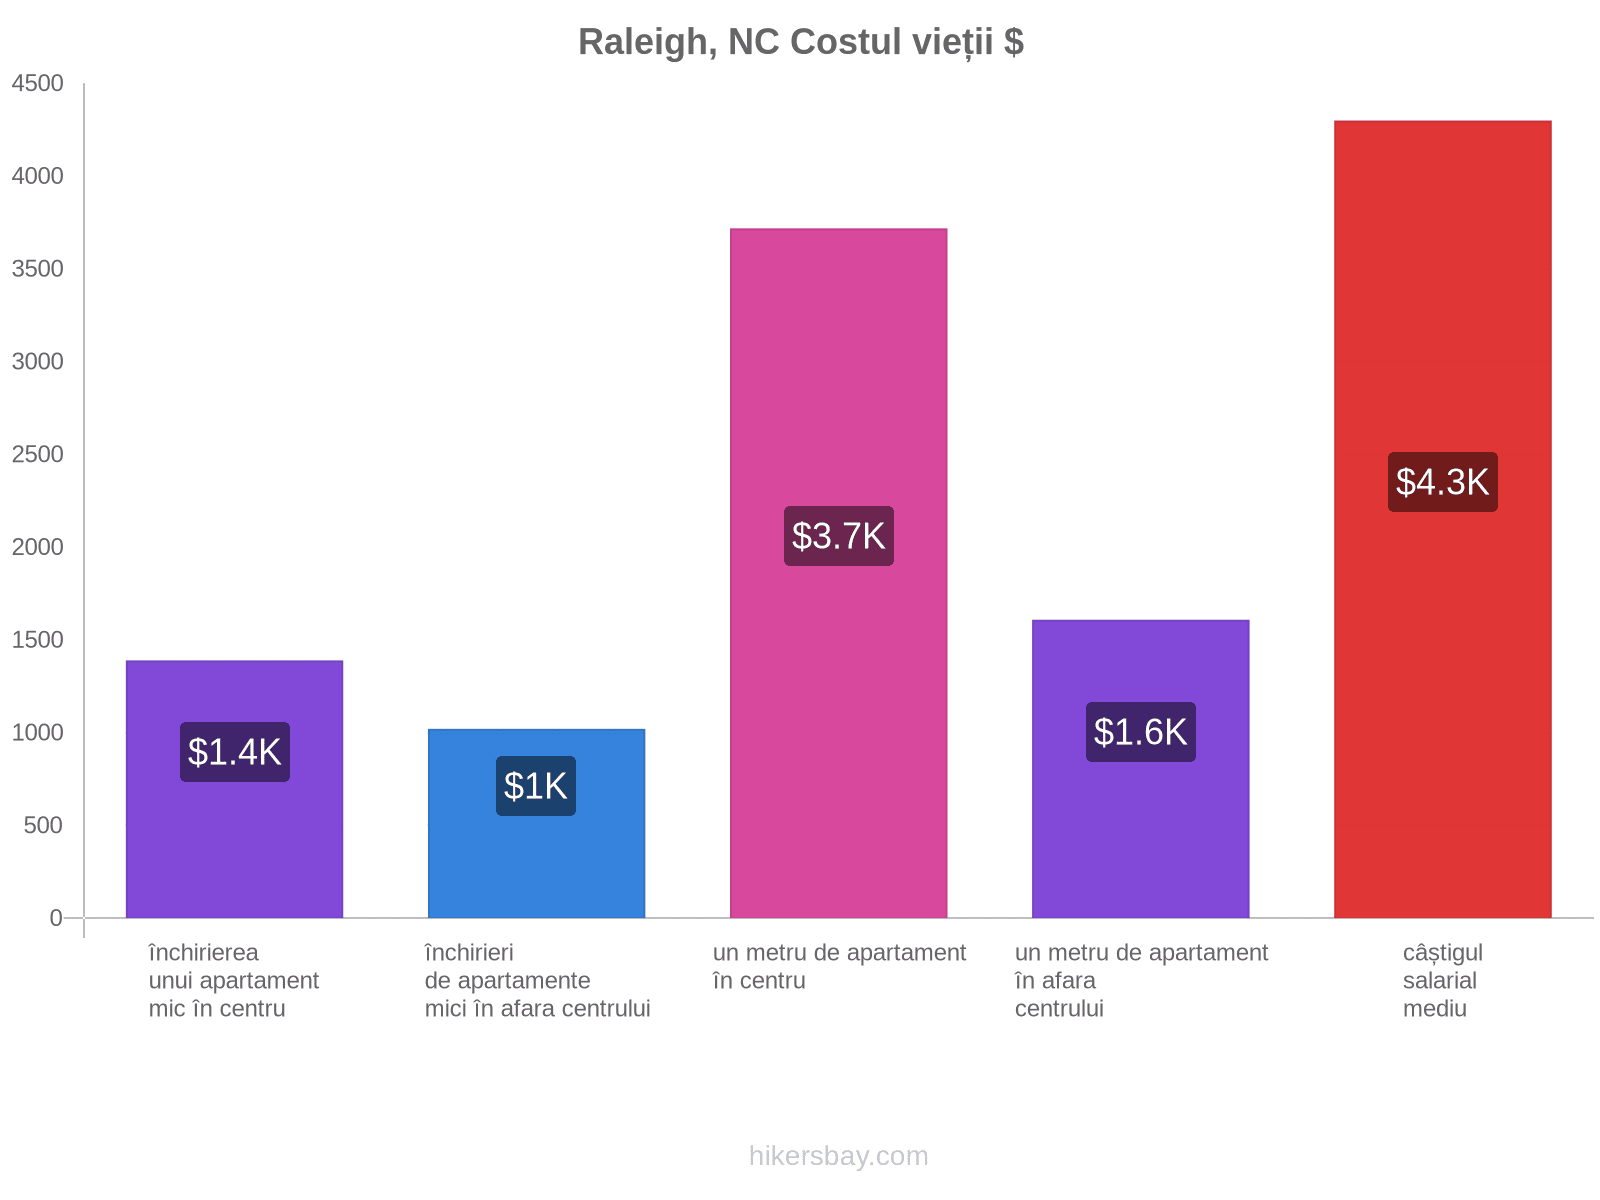 Raleigh, NC costul vieții hikersbay.com